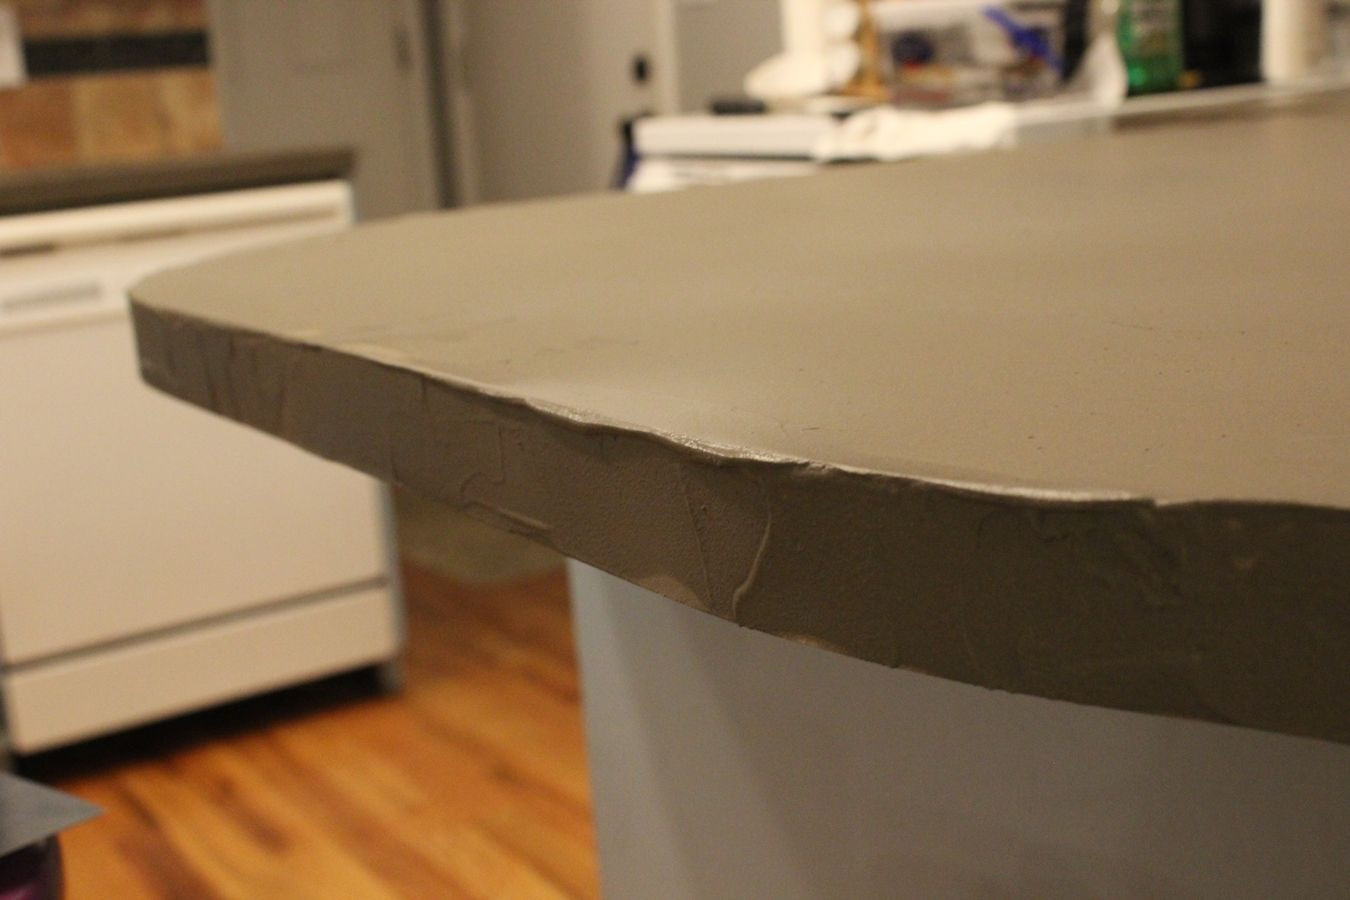 Diy Concrete Kitchen Countertop
 DIY Concrete Kitchen Countertops A Step by Step Tutorial